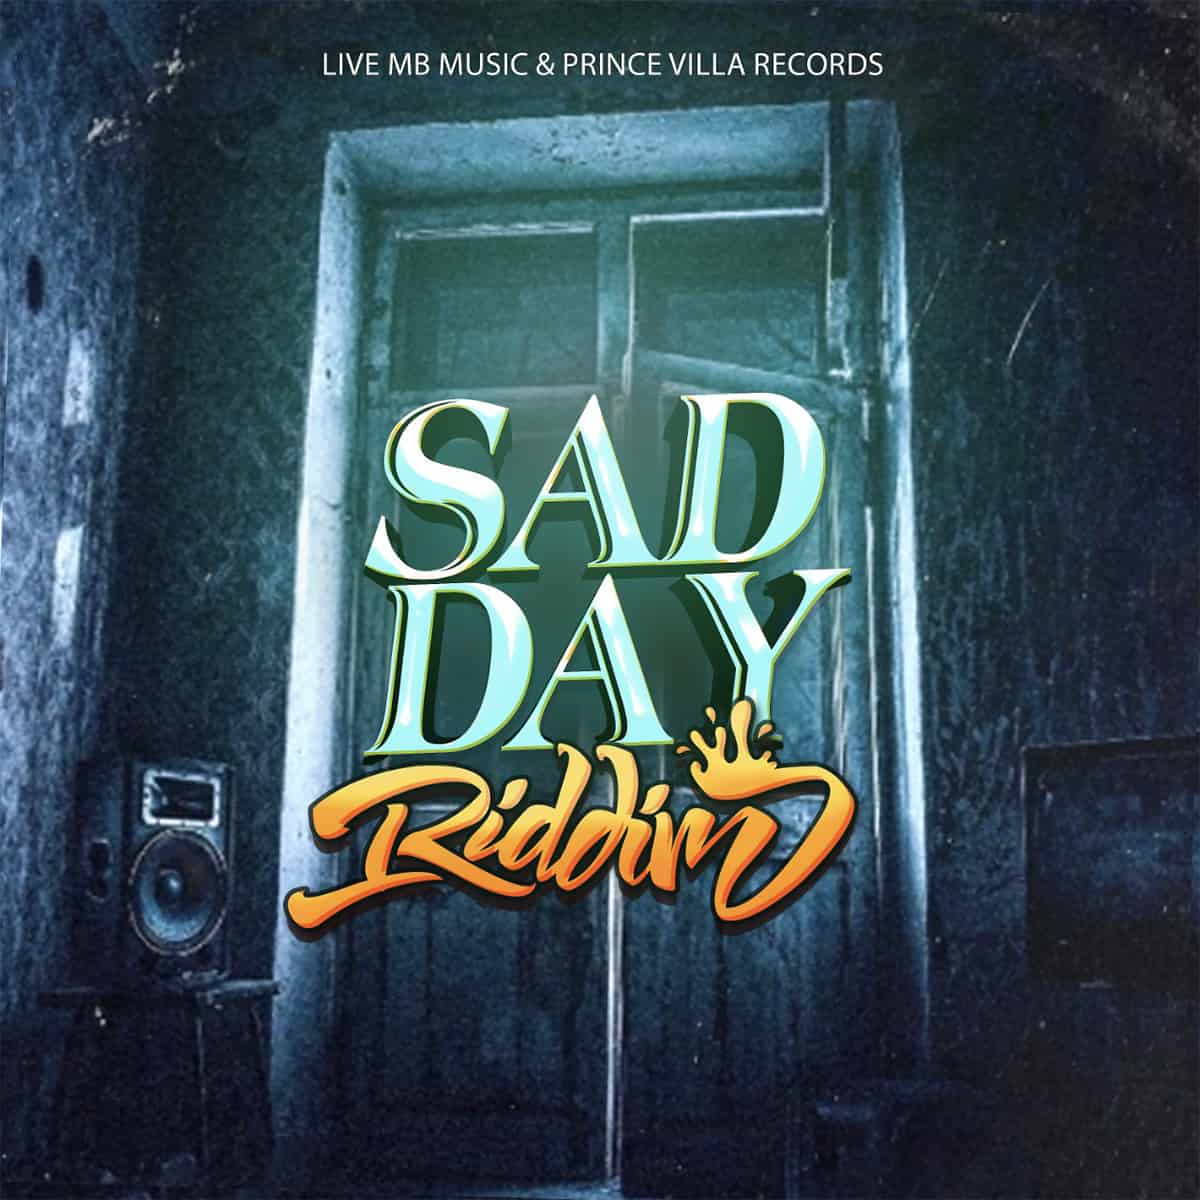 Sad Day Riddim - Prince Villa Records / Live MB Music